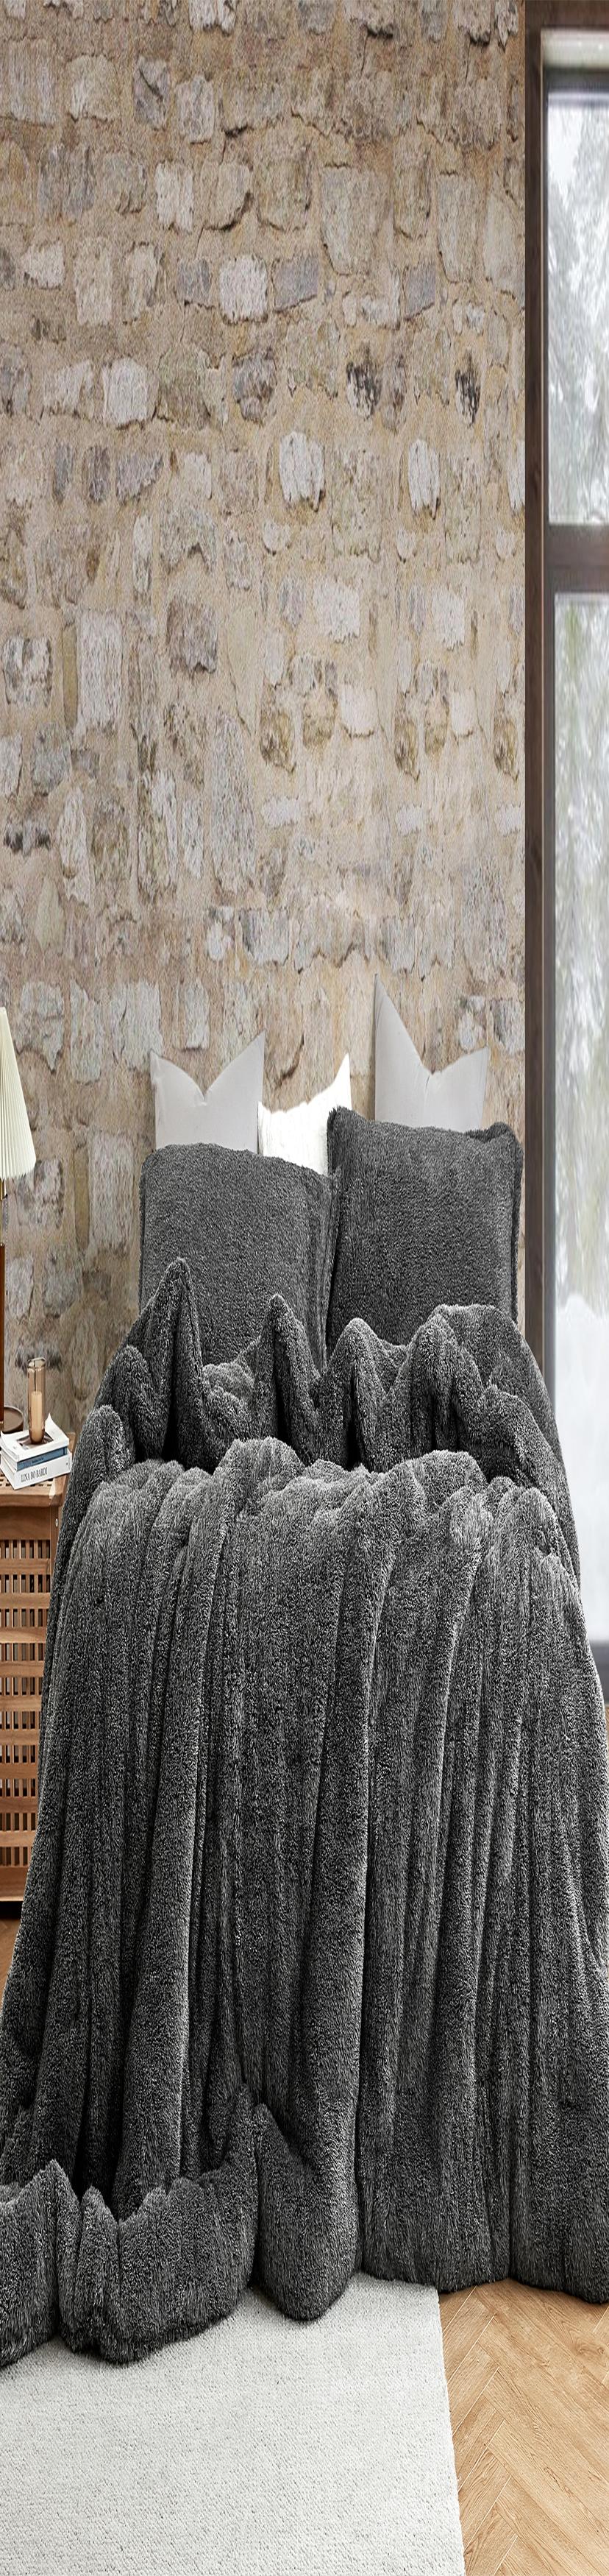 Coma Inducer® Oversized Comforter - The Original Plush - Frosted Polar Marsh